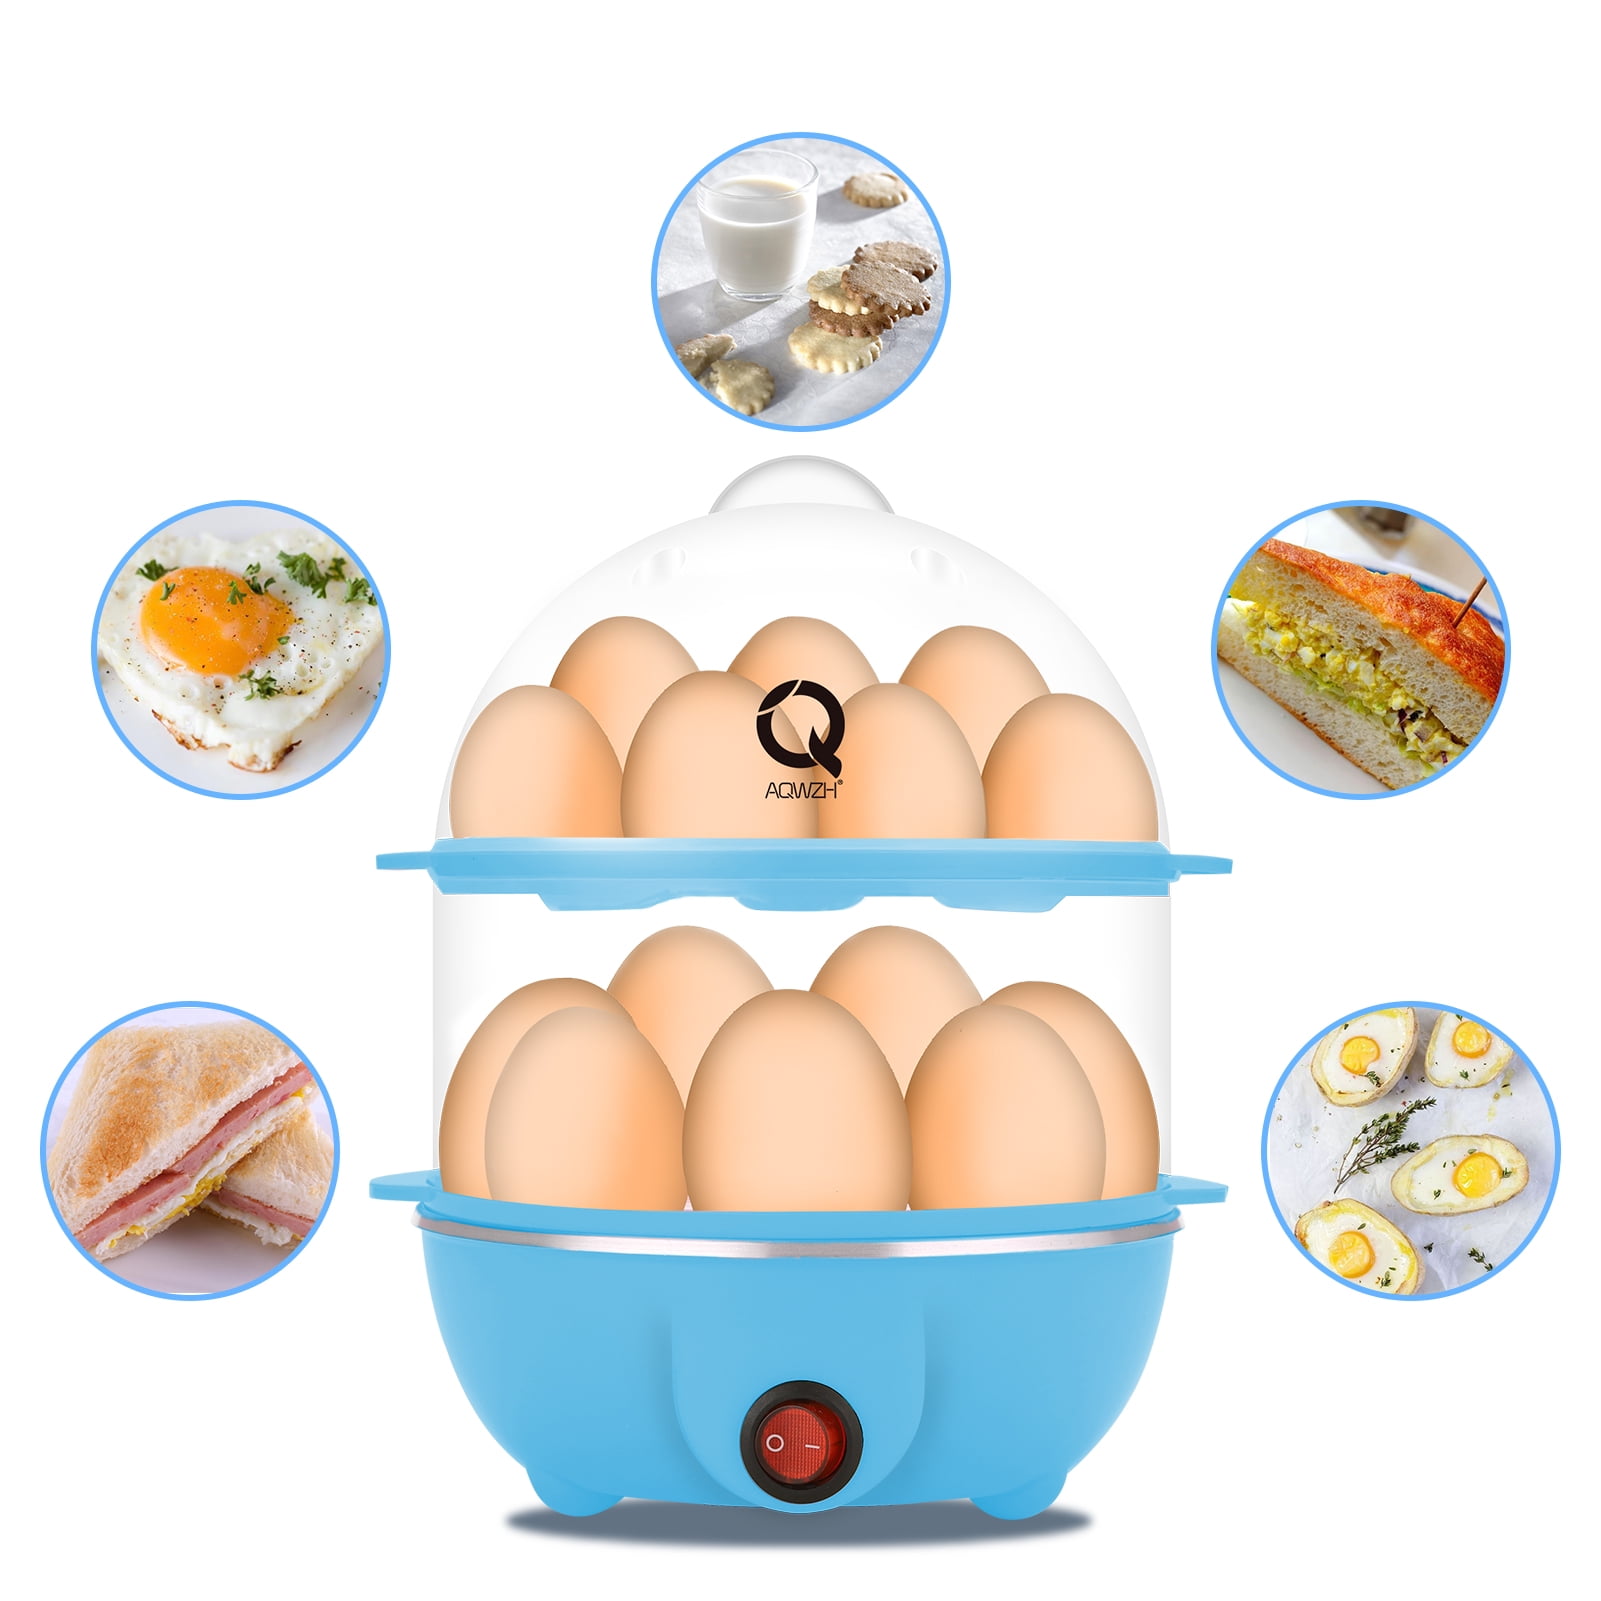 VOBAGA Electric Egg Cooker, Rapid Egg Boiler with Auto Shut Off for Soft, Medium, Hard Boiled, Poached, Steamed Eggs, Vegetables and Dumplings